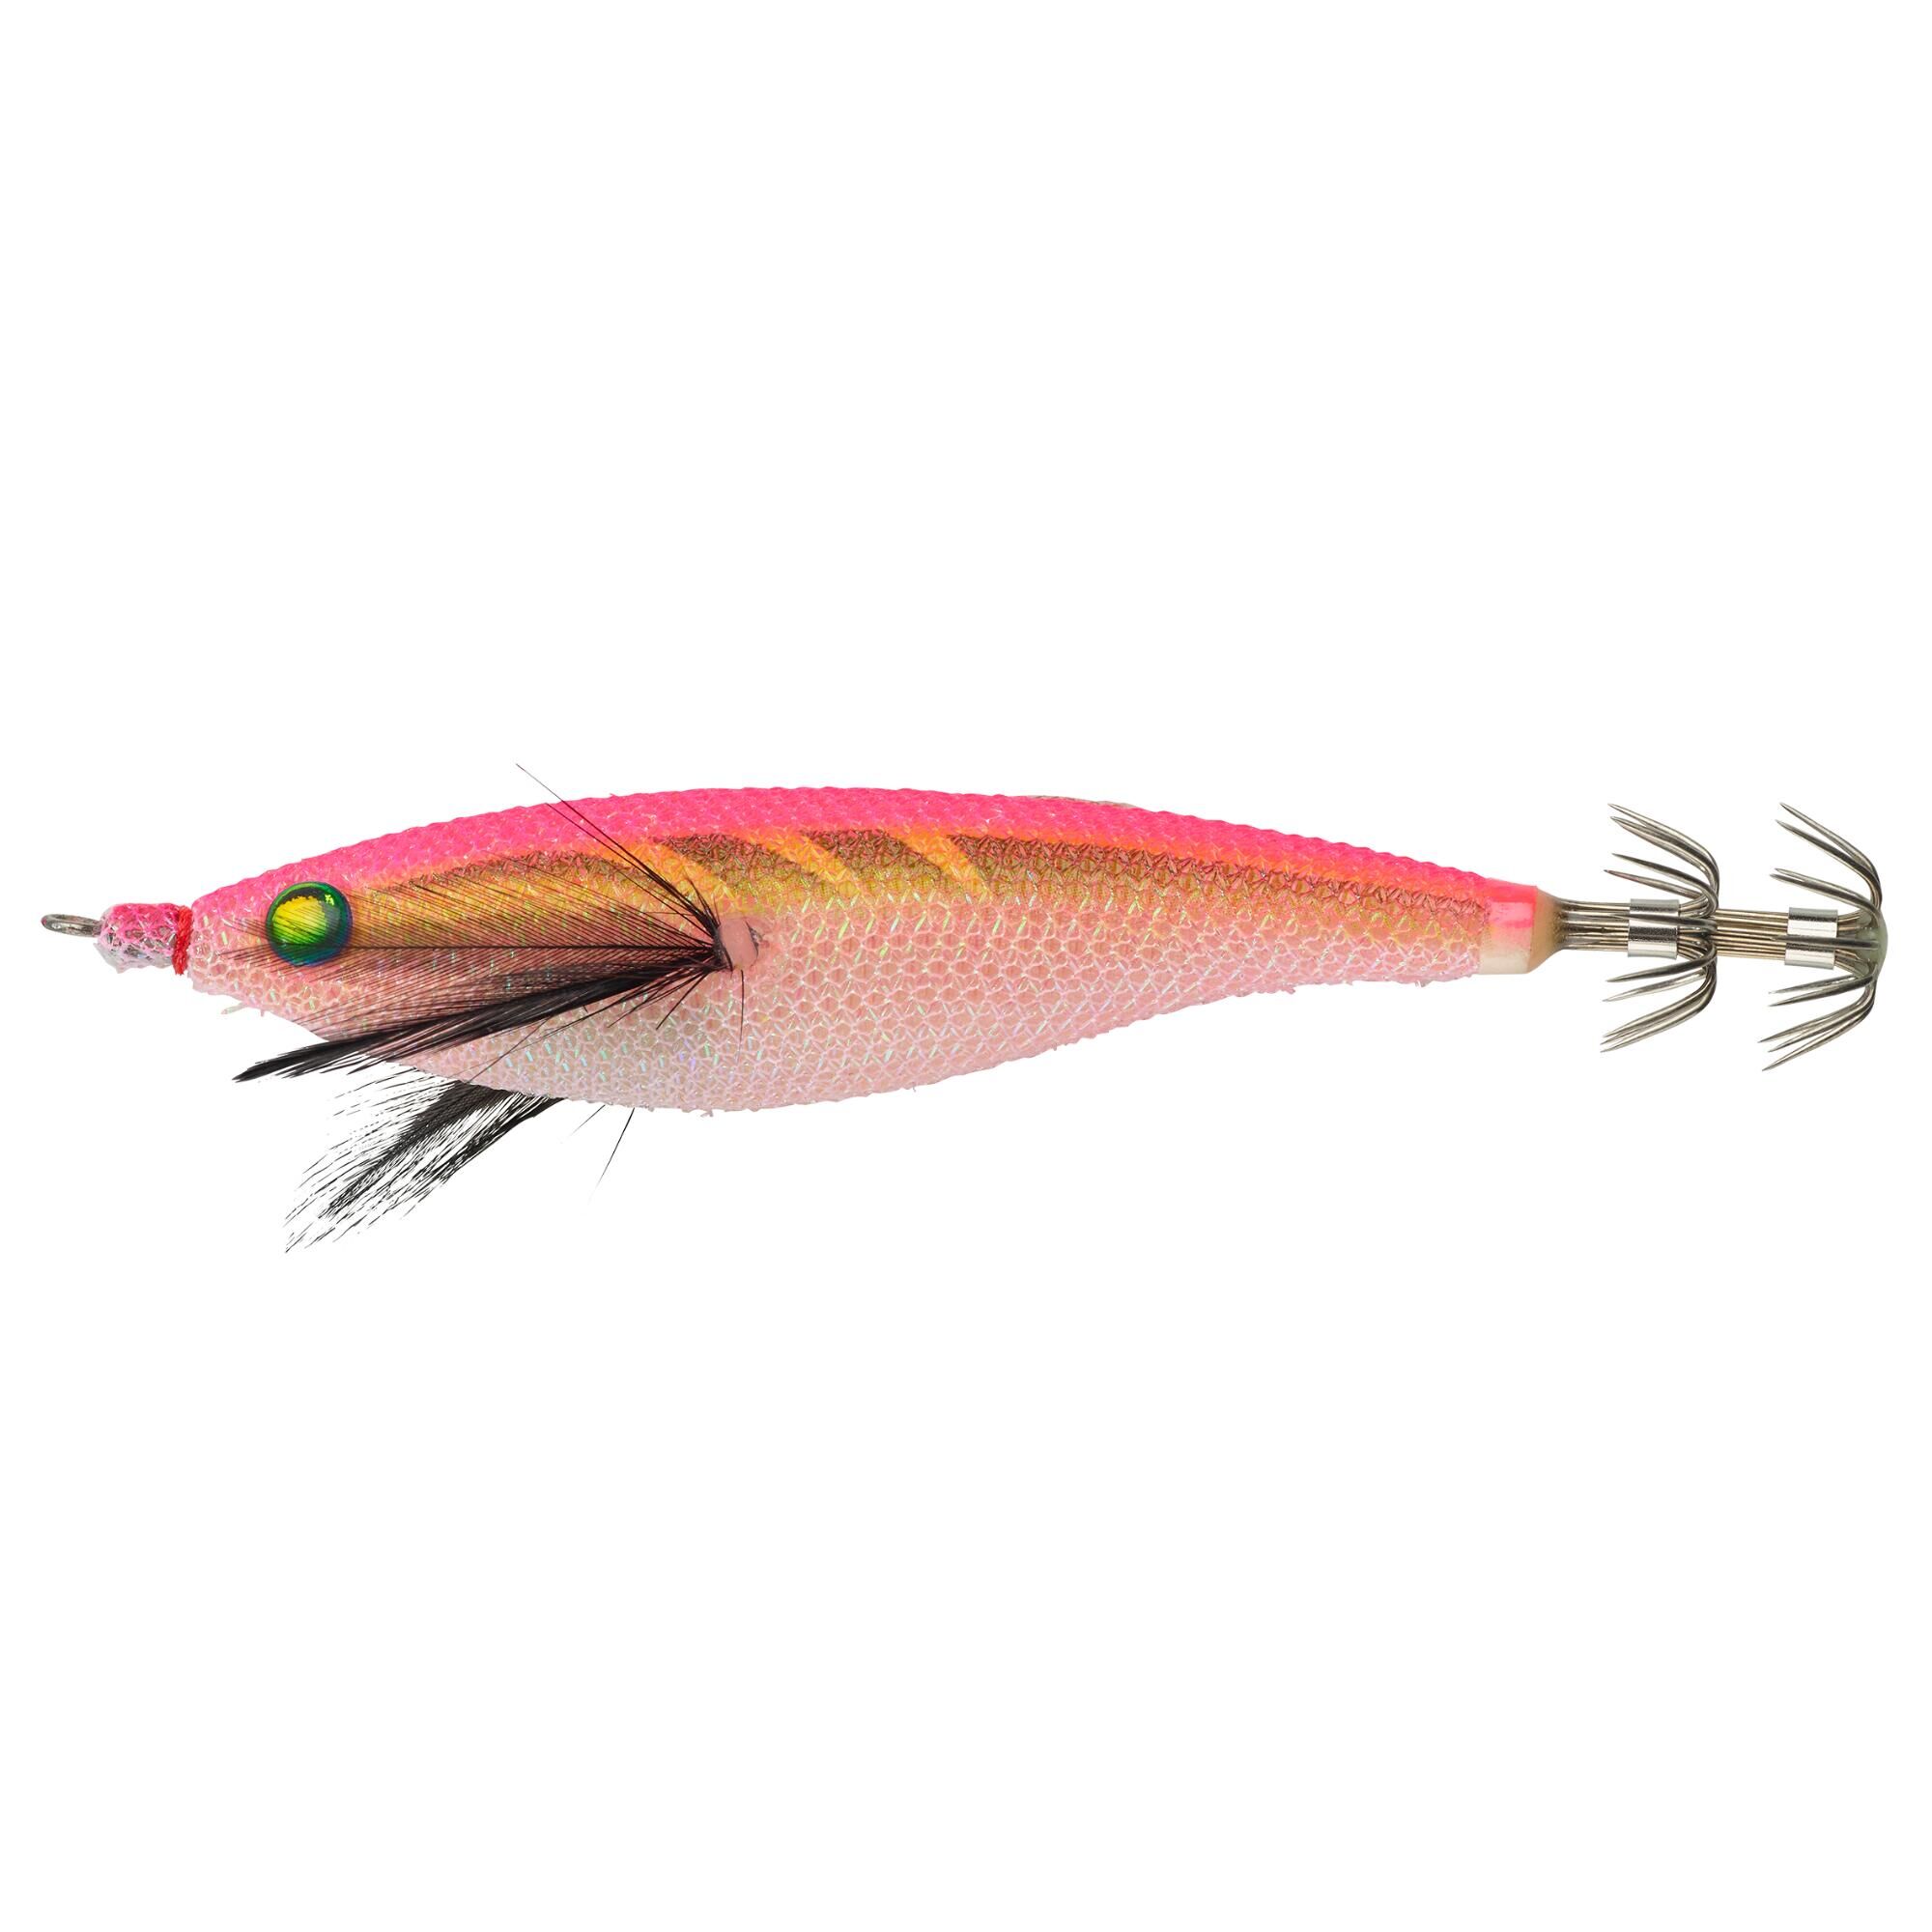 CAPERLAN Floating jig for cuttlefish/squid fishing EBIFLO 2.5/110 - Neon pink